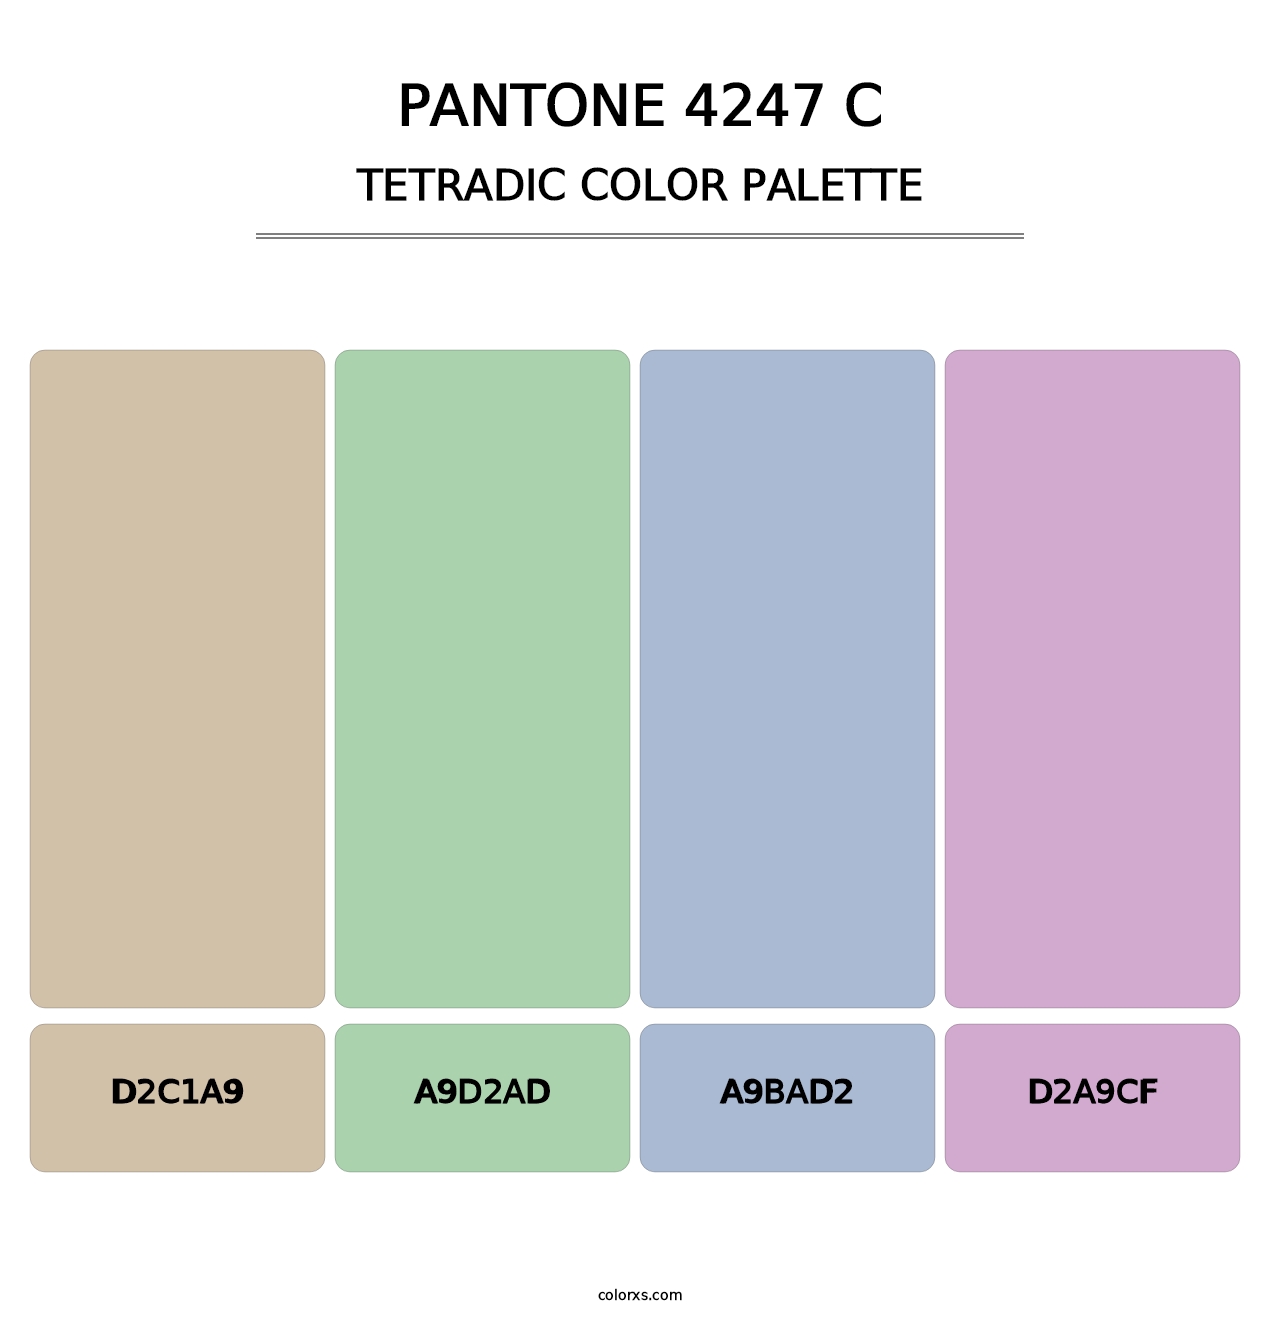 PANTONE 4247 C - Tetradic Color Palette